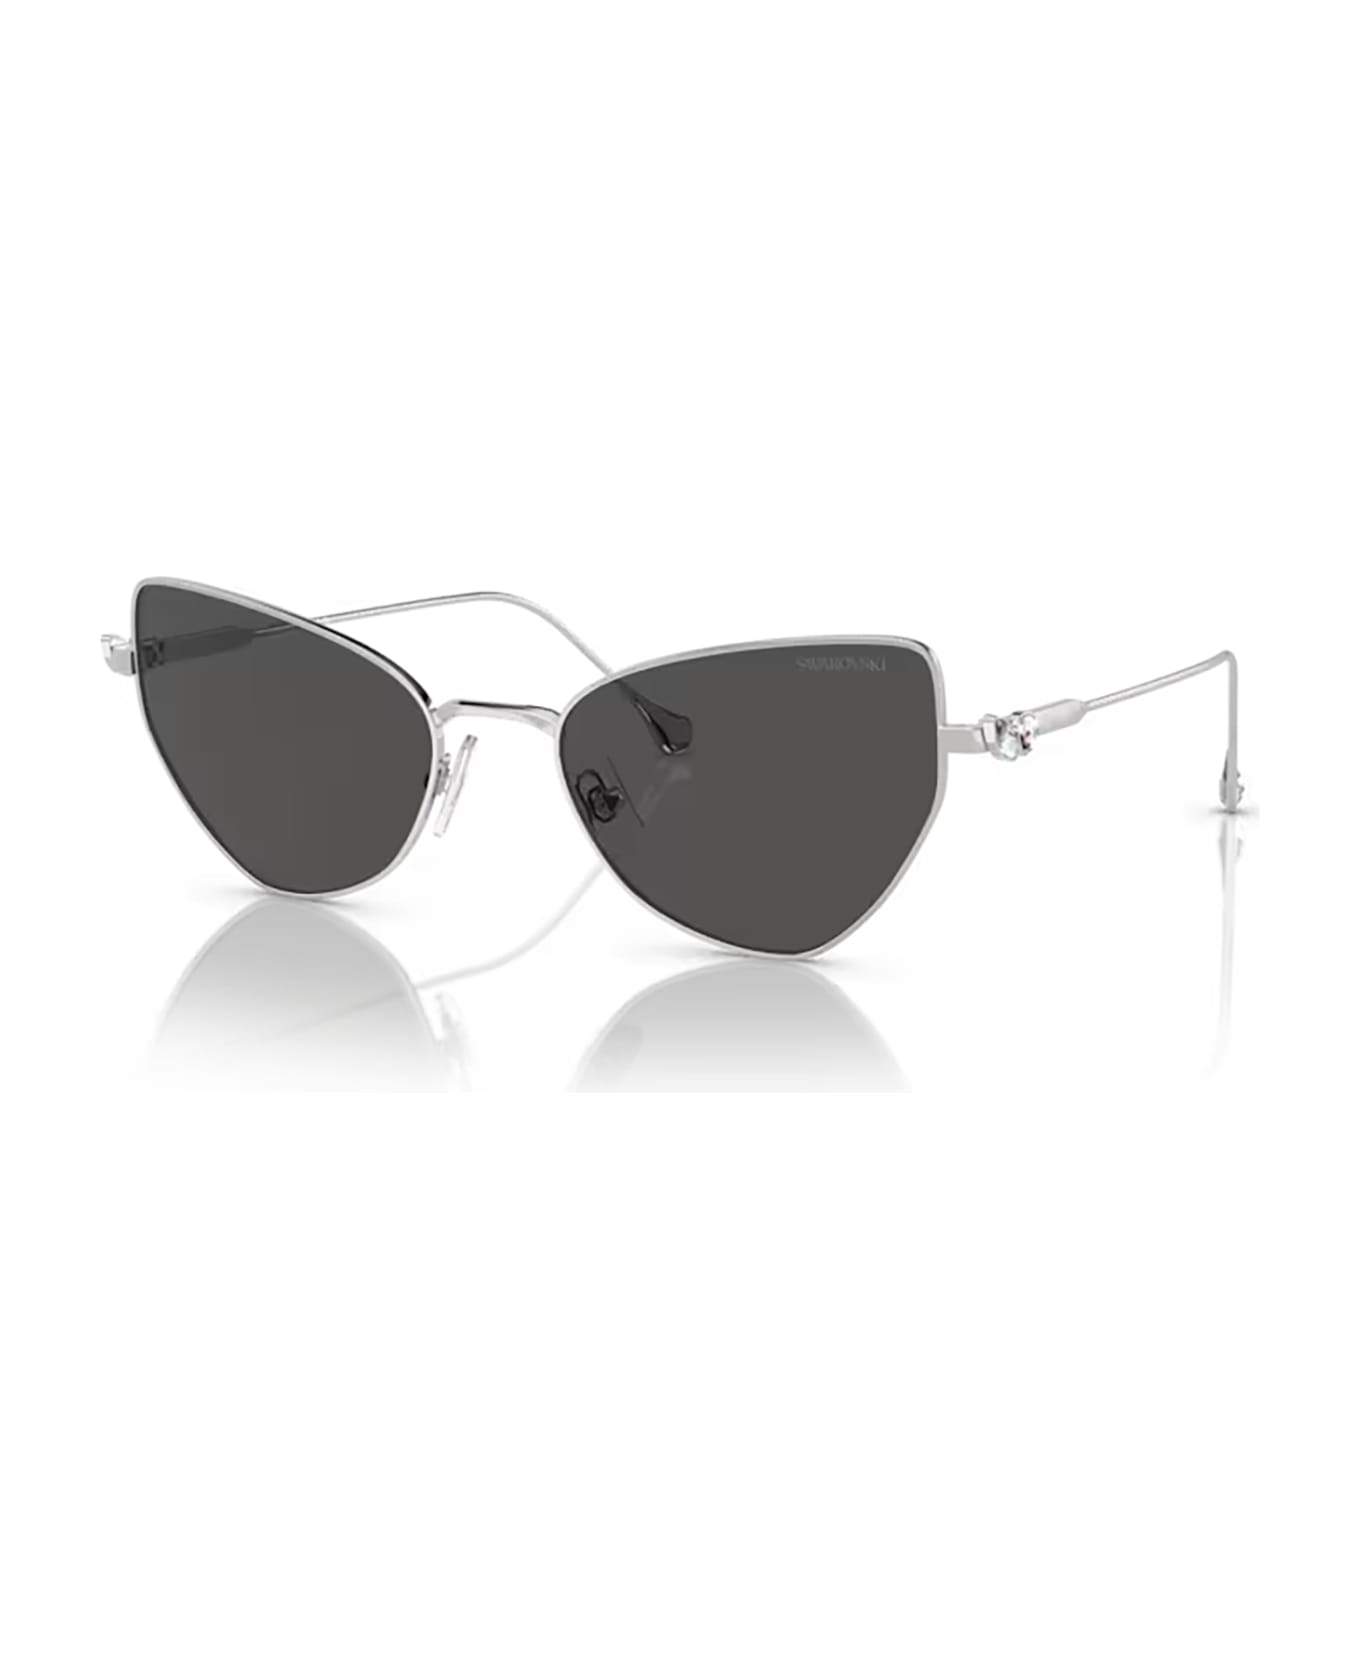 Swarovski Sk7011 Silver Sunglasses - Silver